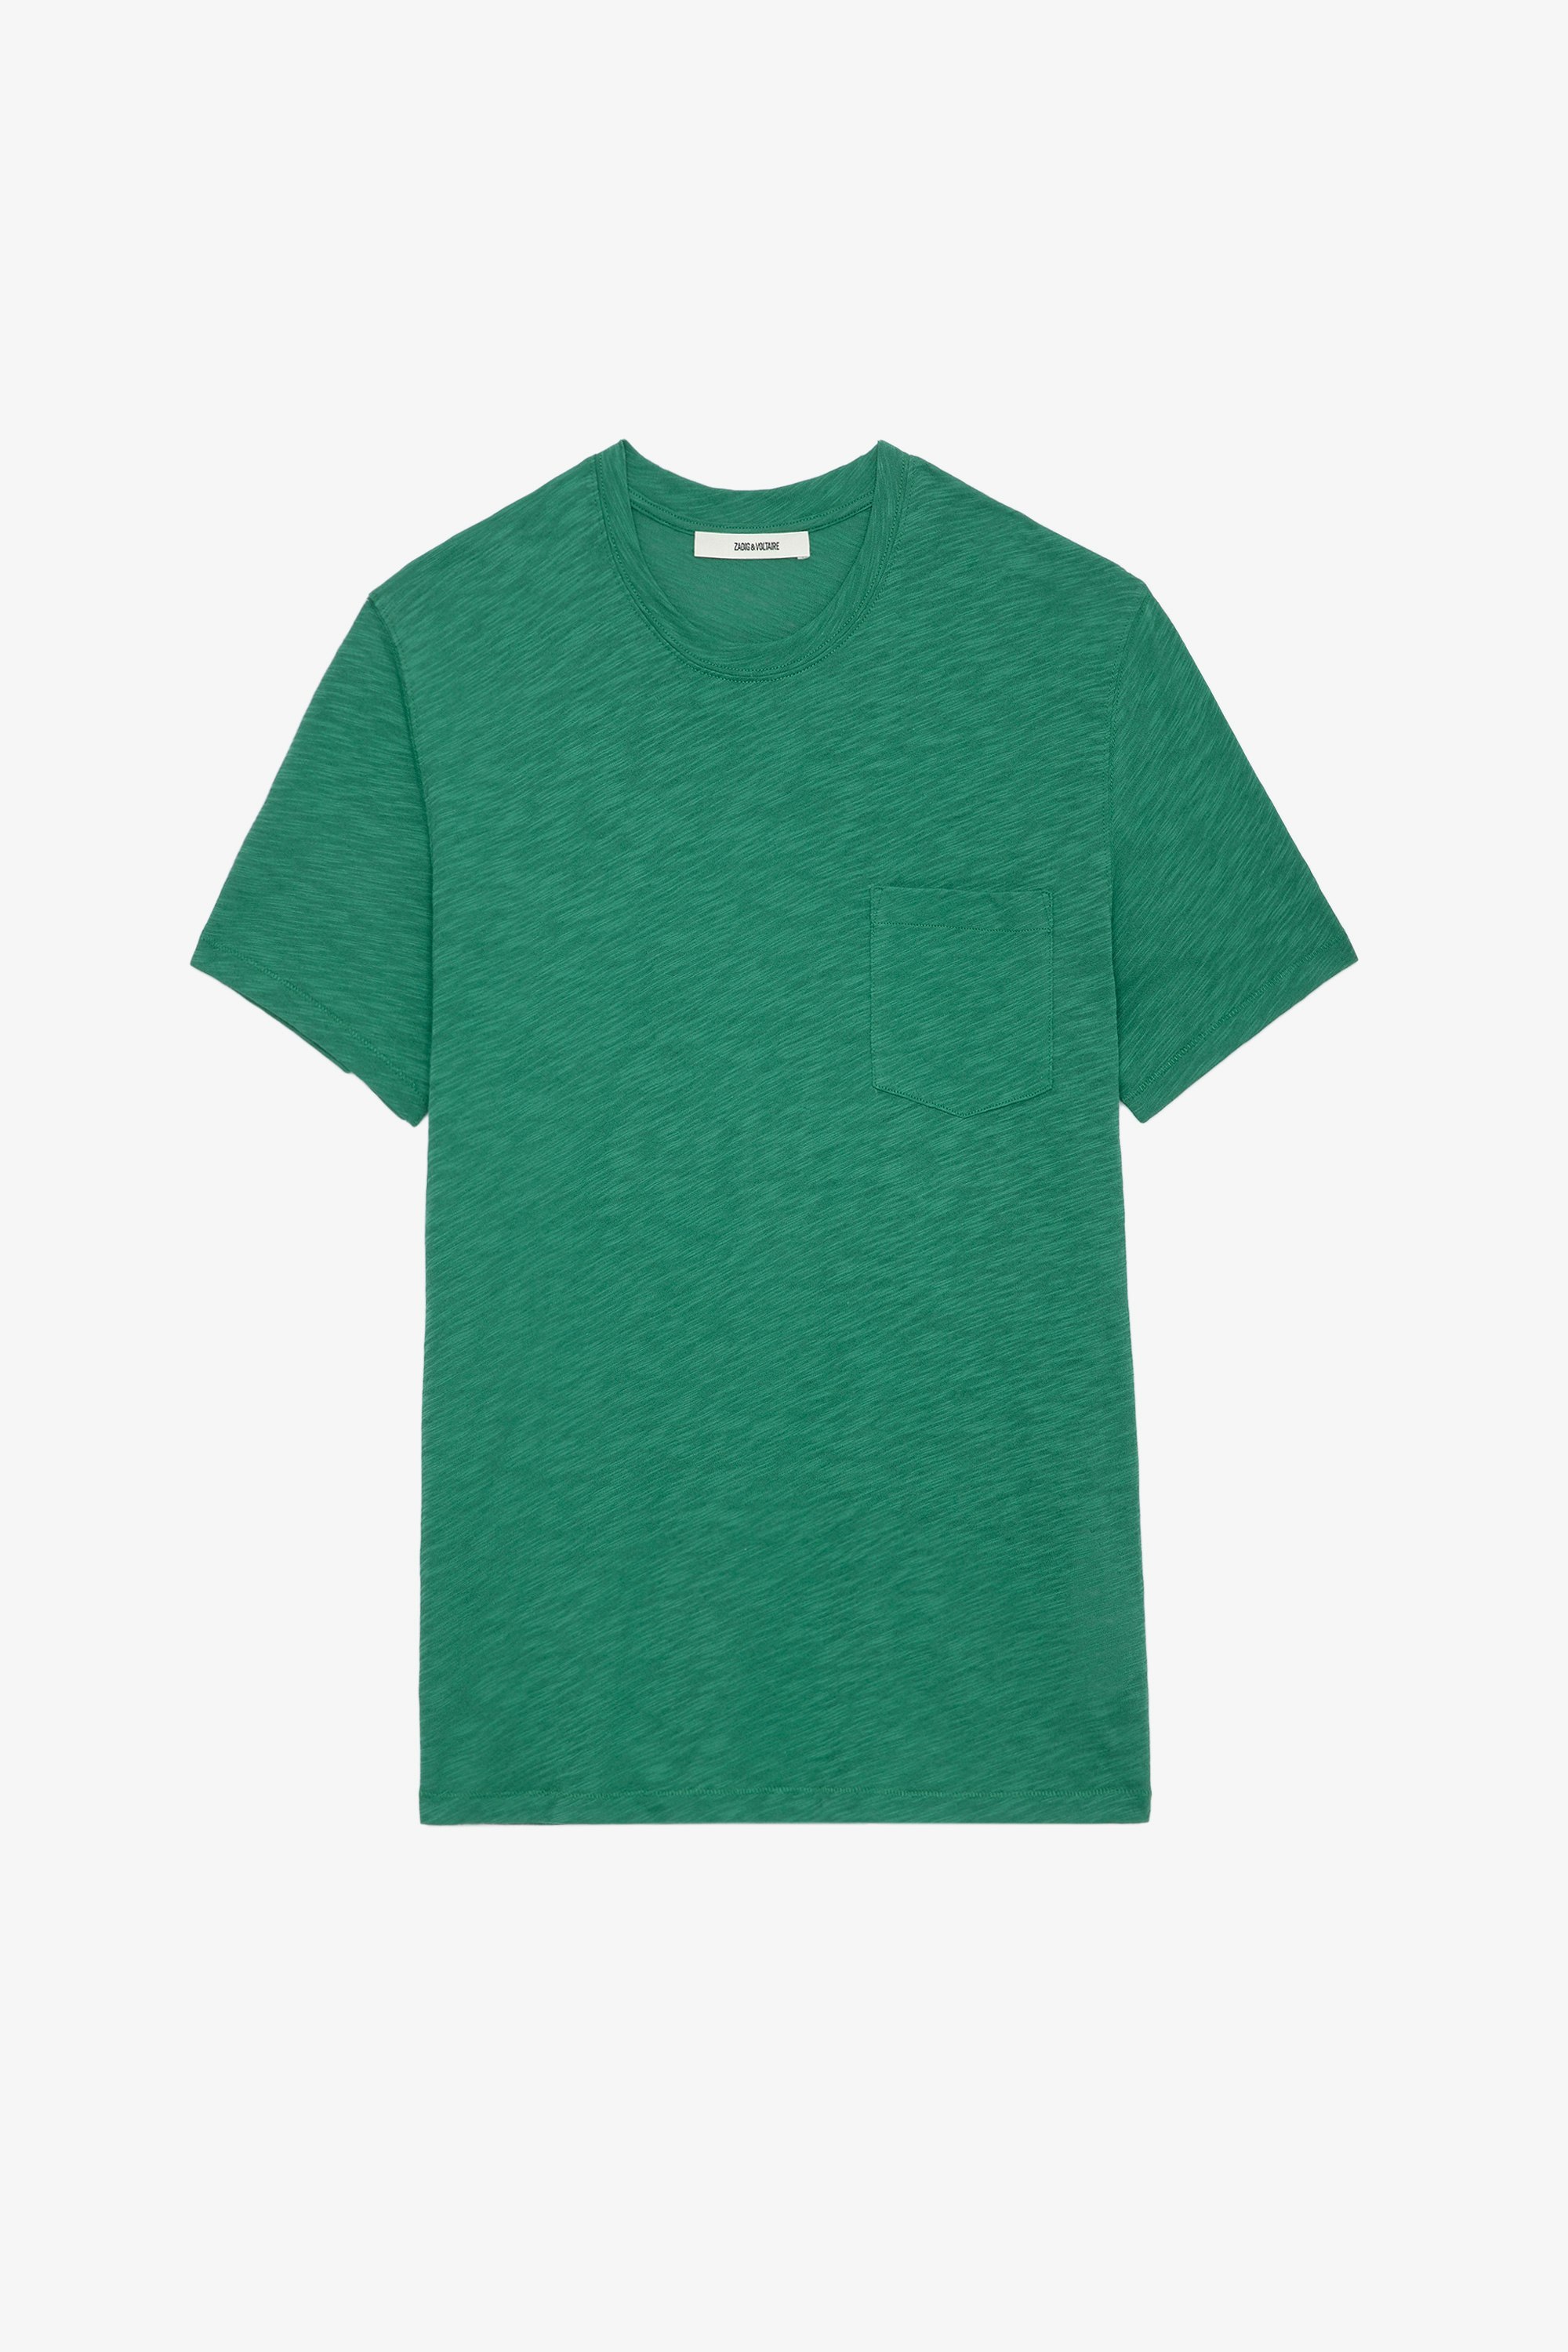 Camiseta Stockholm Flamme - Camiseta verde de algodón jaspeado de manga corta, con bolsillo y diseño Skull Block en la espalda.